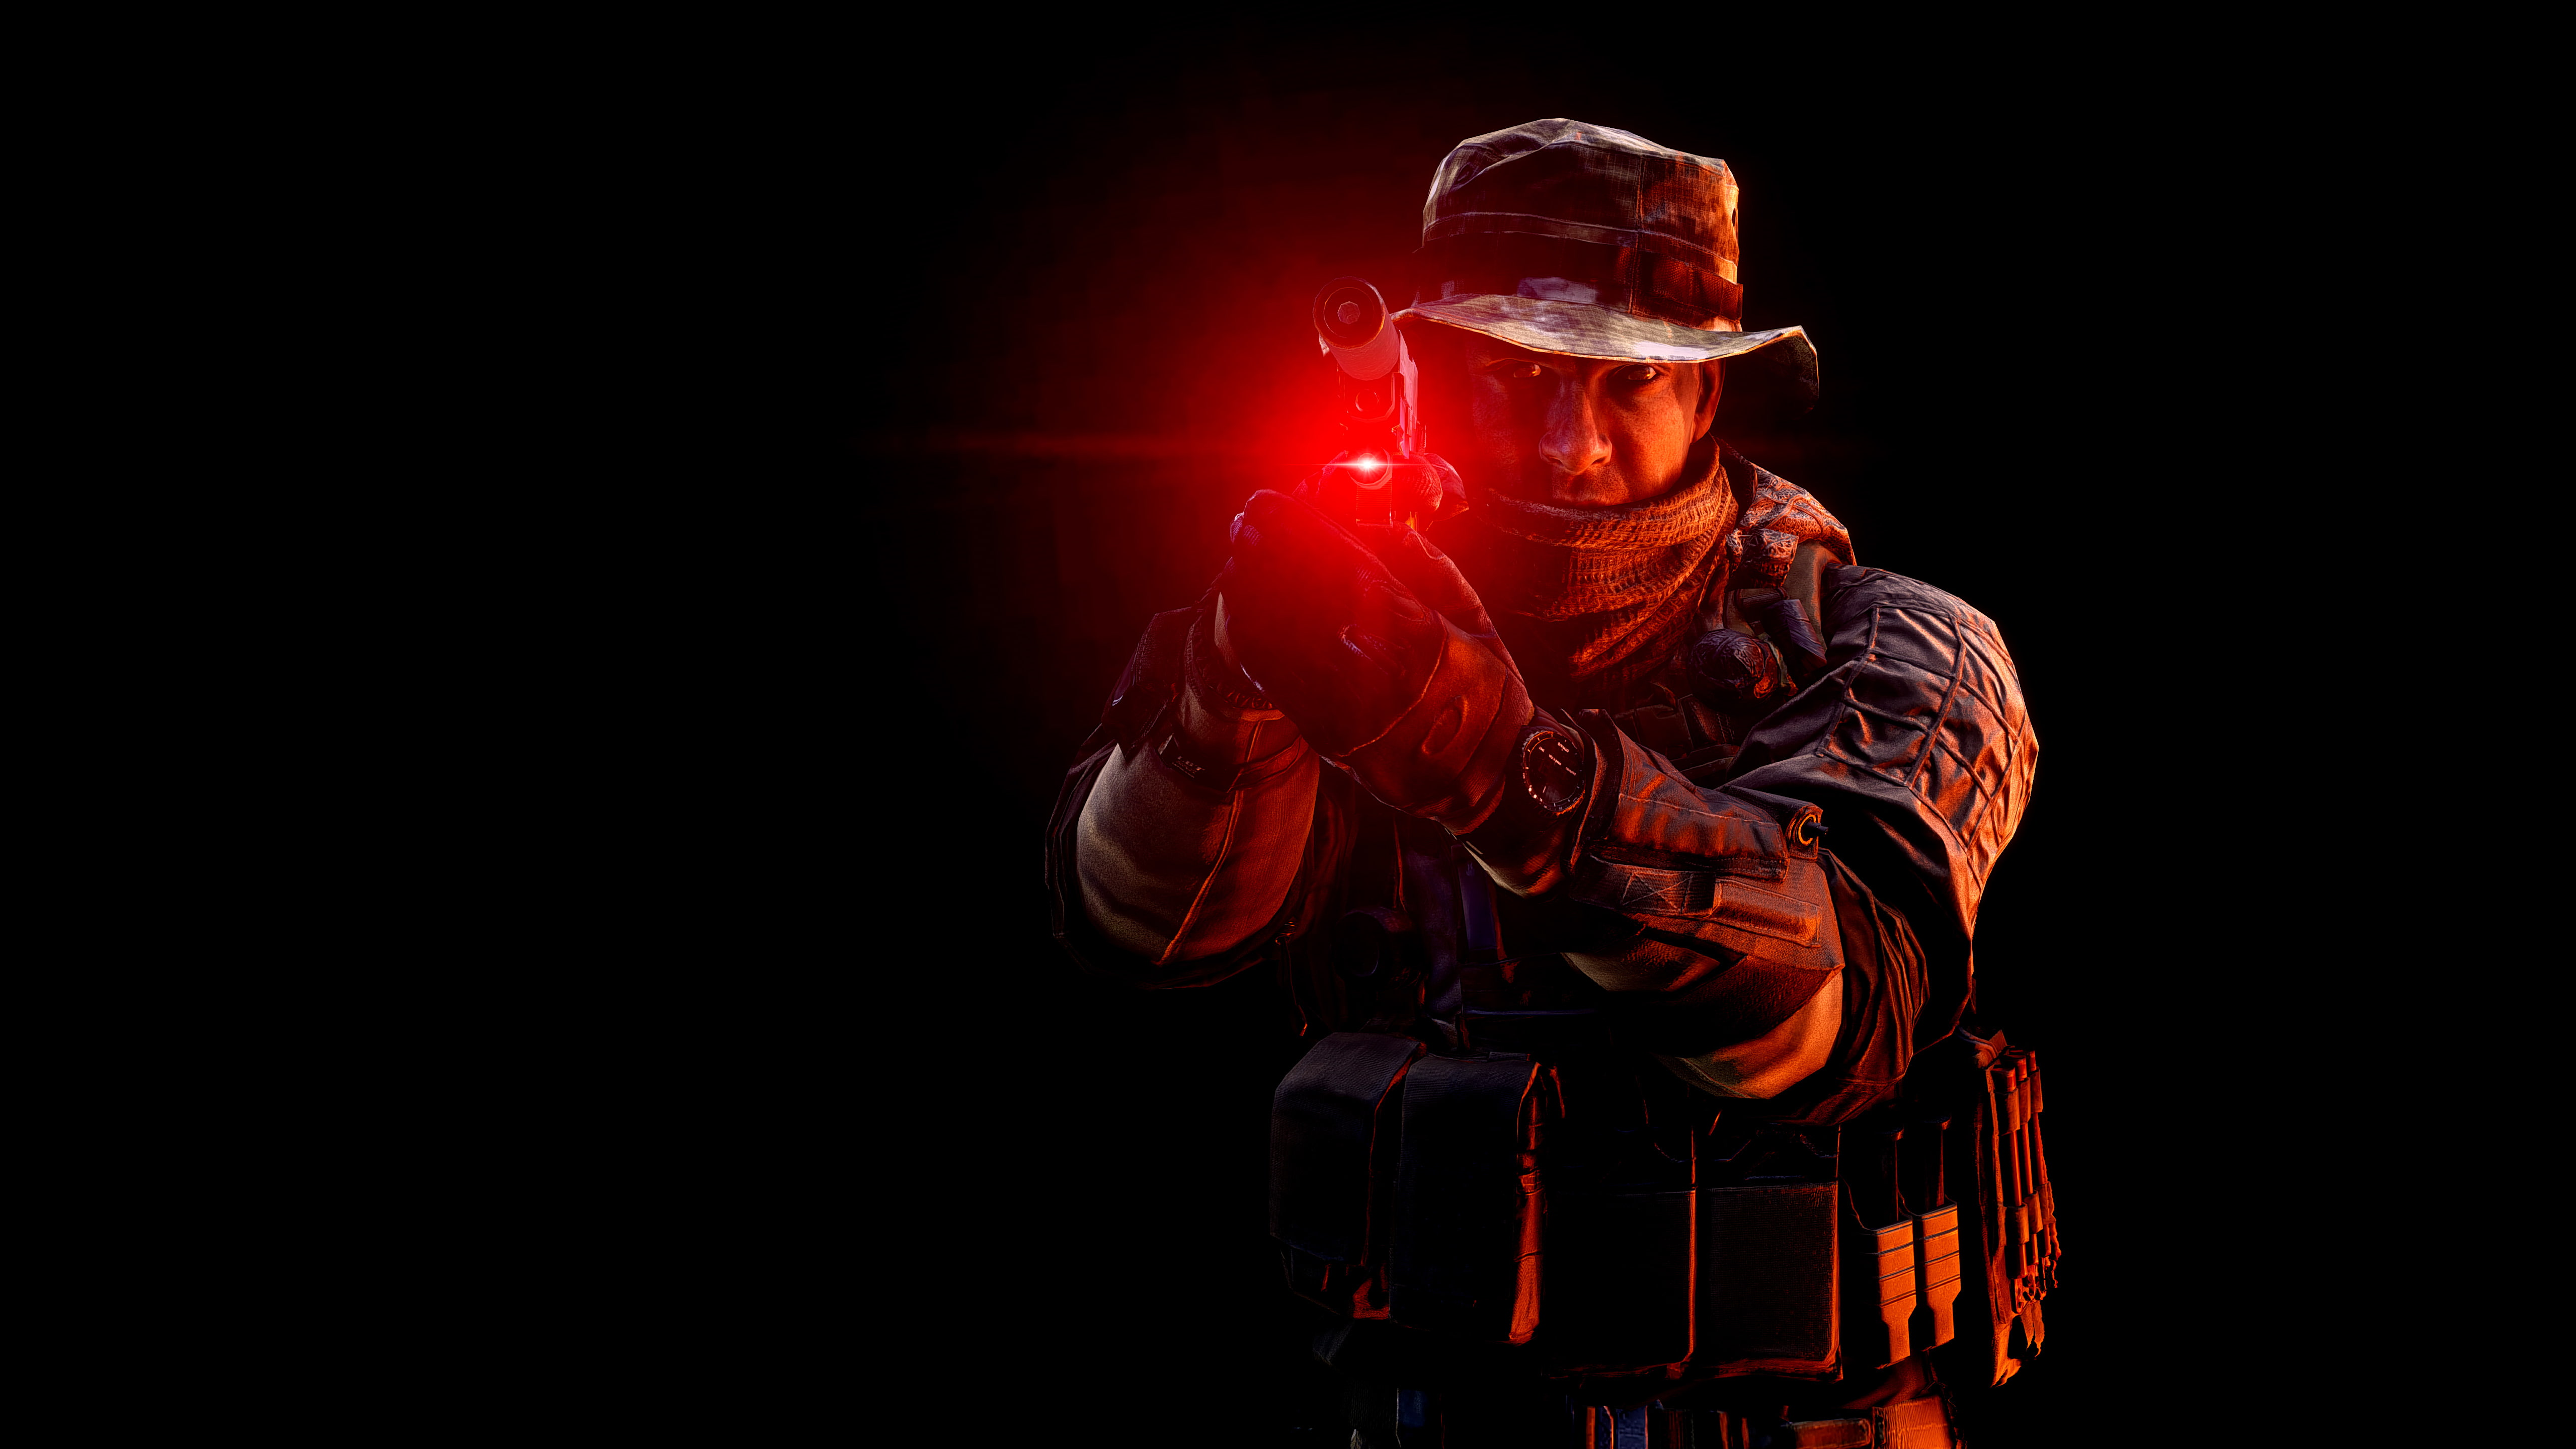 soldier holding laser pointer sign pistol, Battlefield 4, Red dot sight